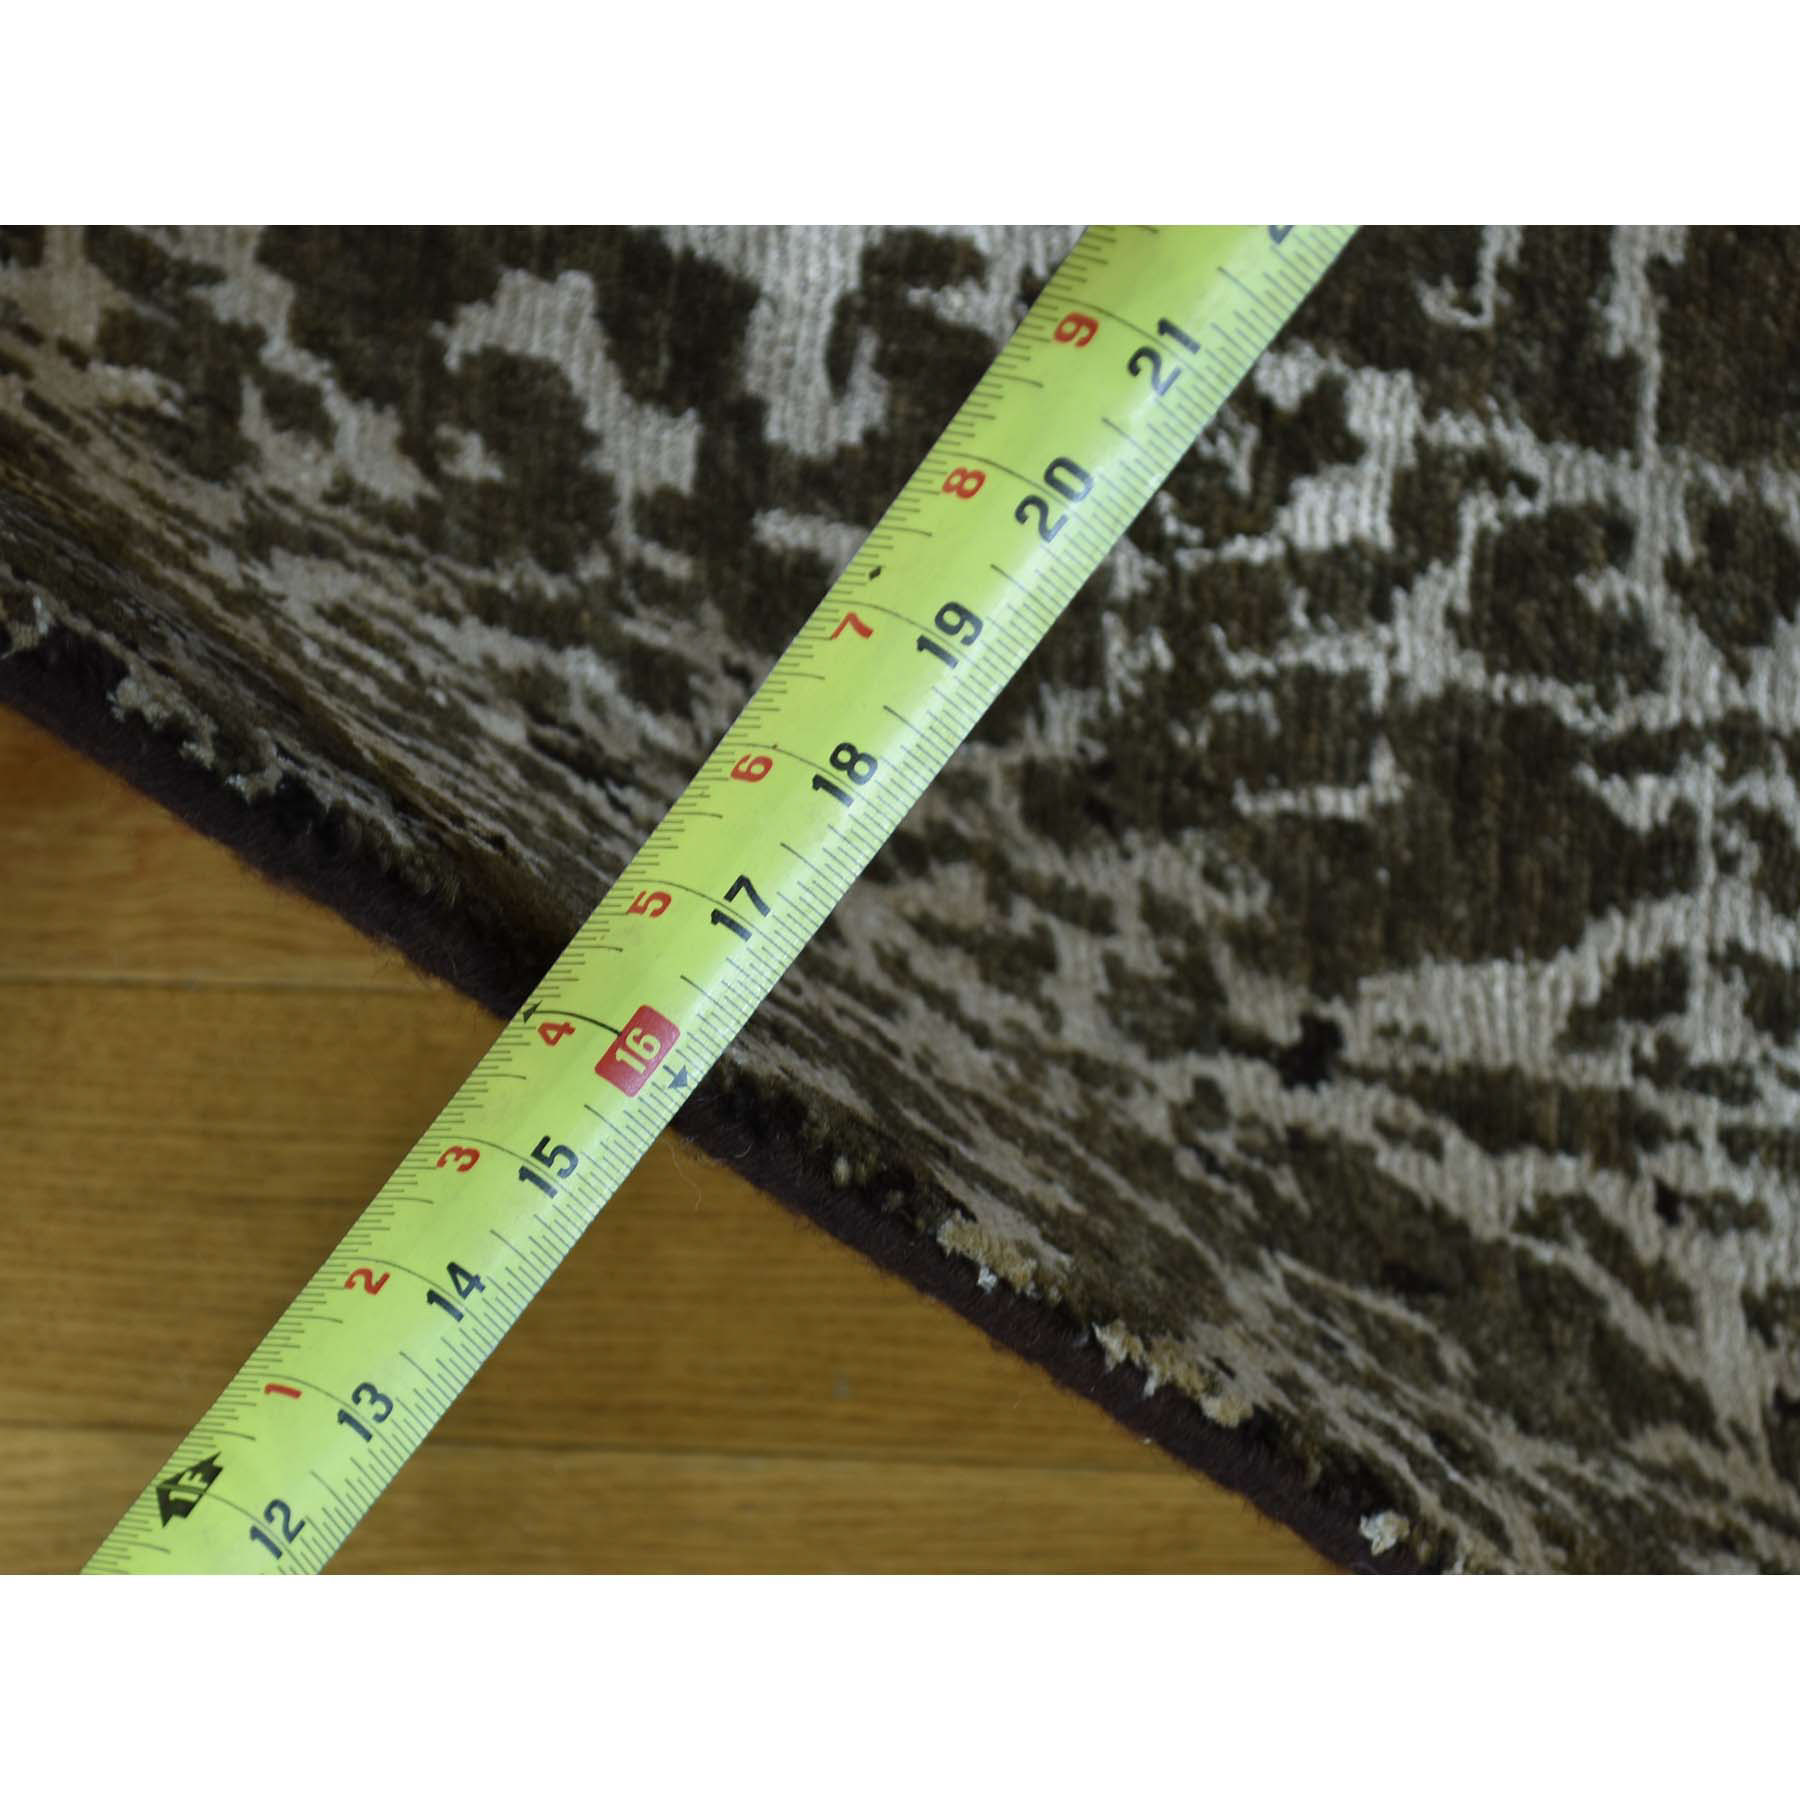 2'x2'9" Black Modern Wool and Silk Hand Woven Abstract Design Oriental Rug 